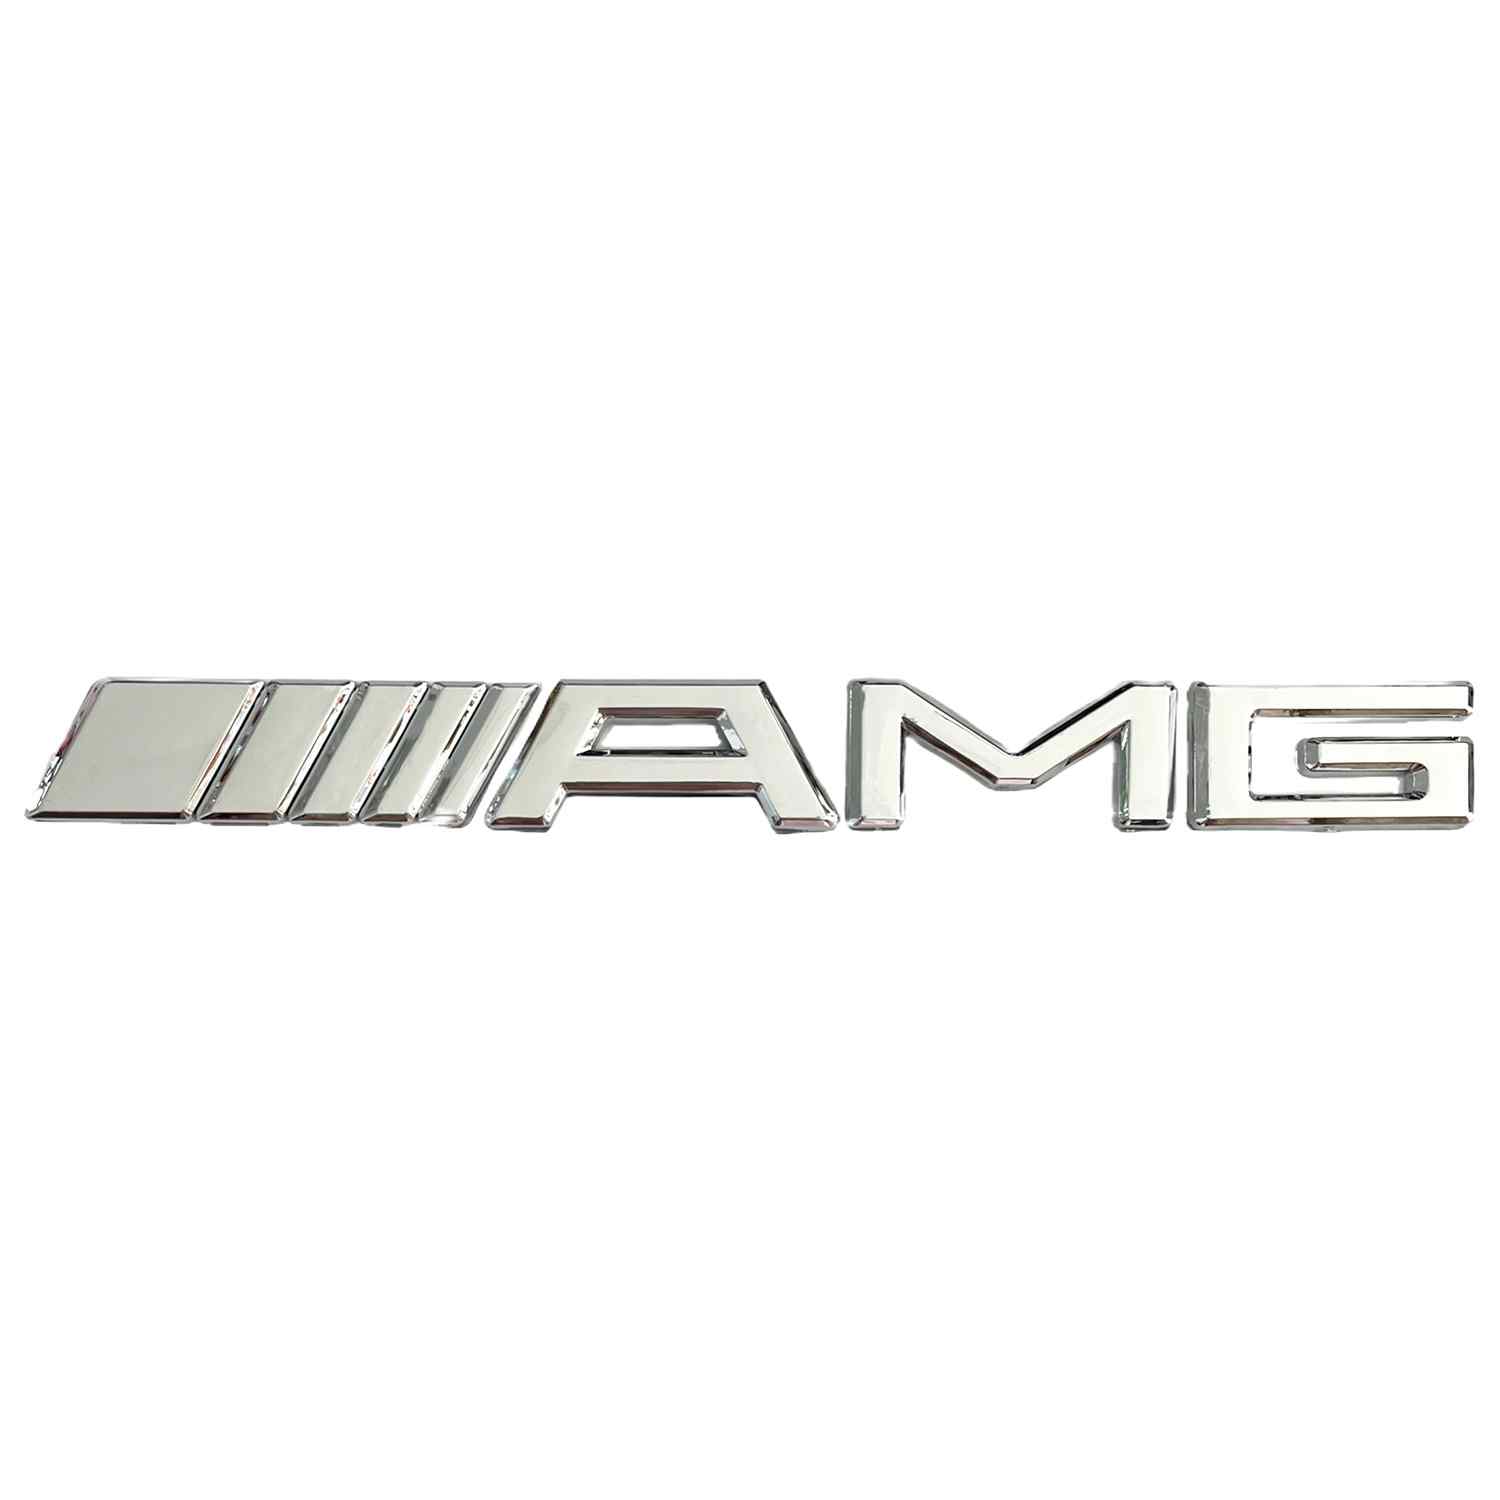 Emblema Adhesivo plastico AMG para maletero compatible con Mercedes plateado